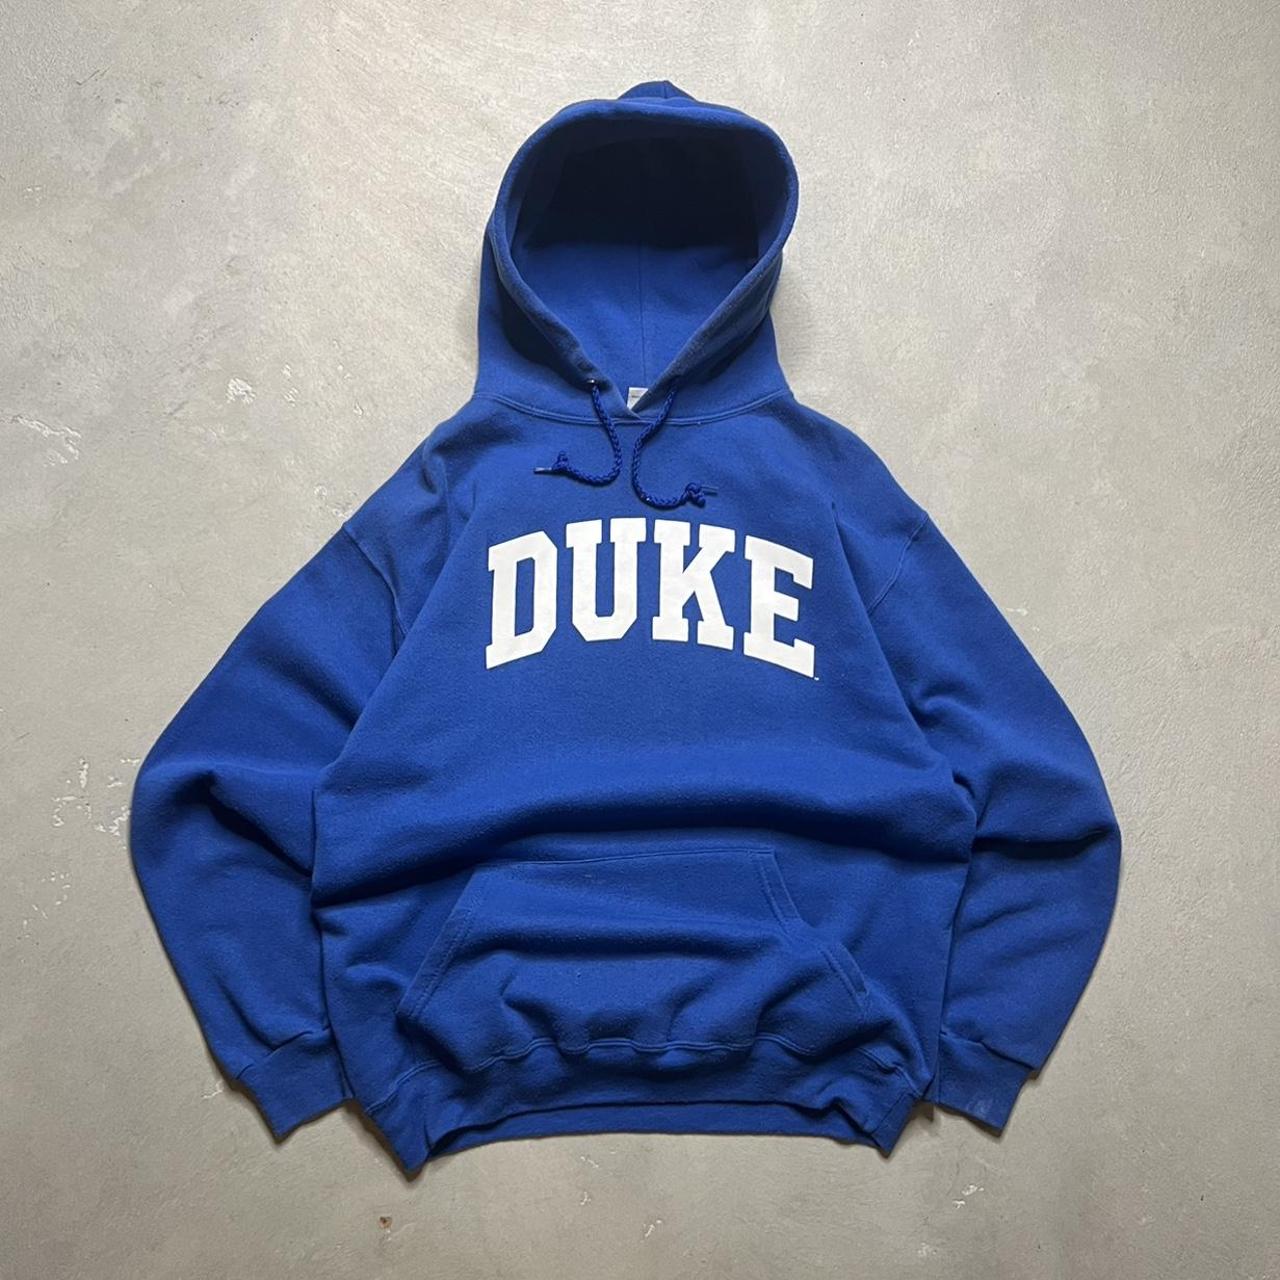 Duke Men's White and Blue Hoodie